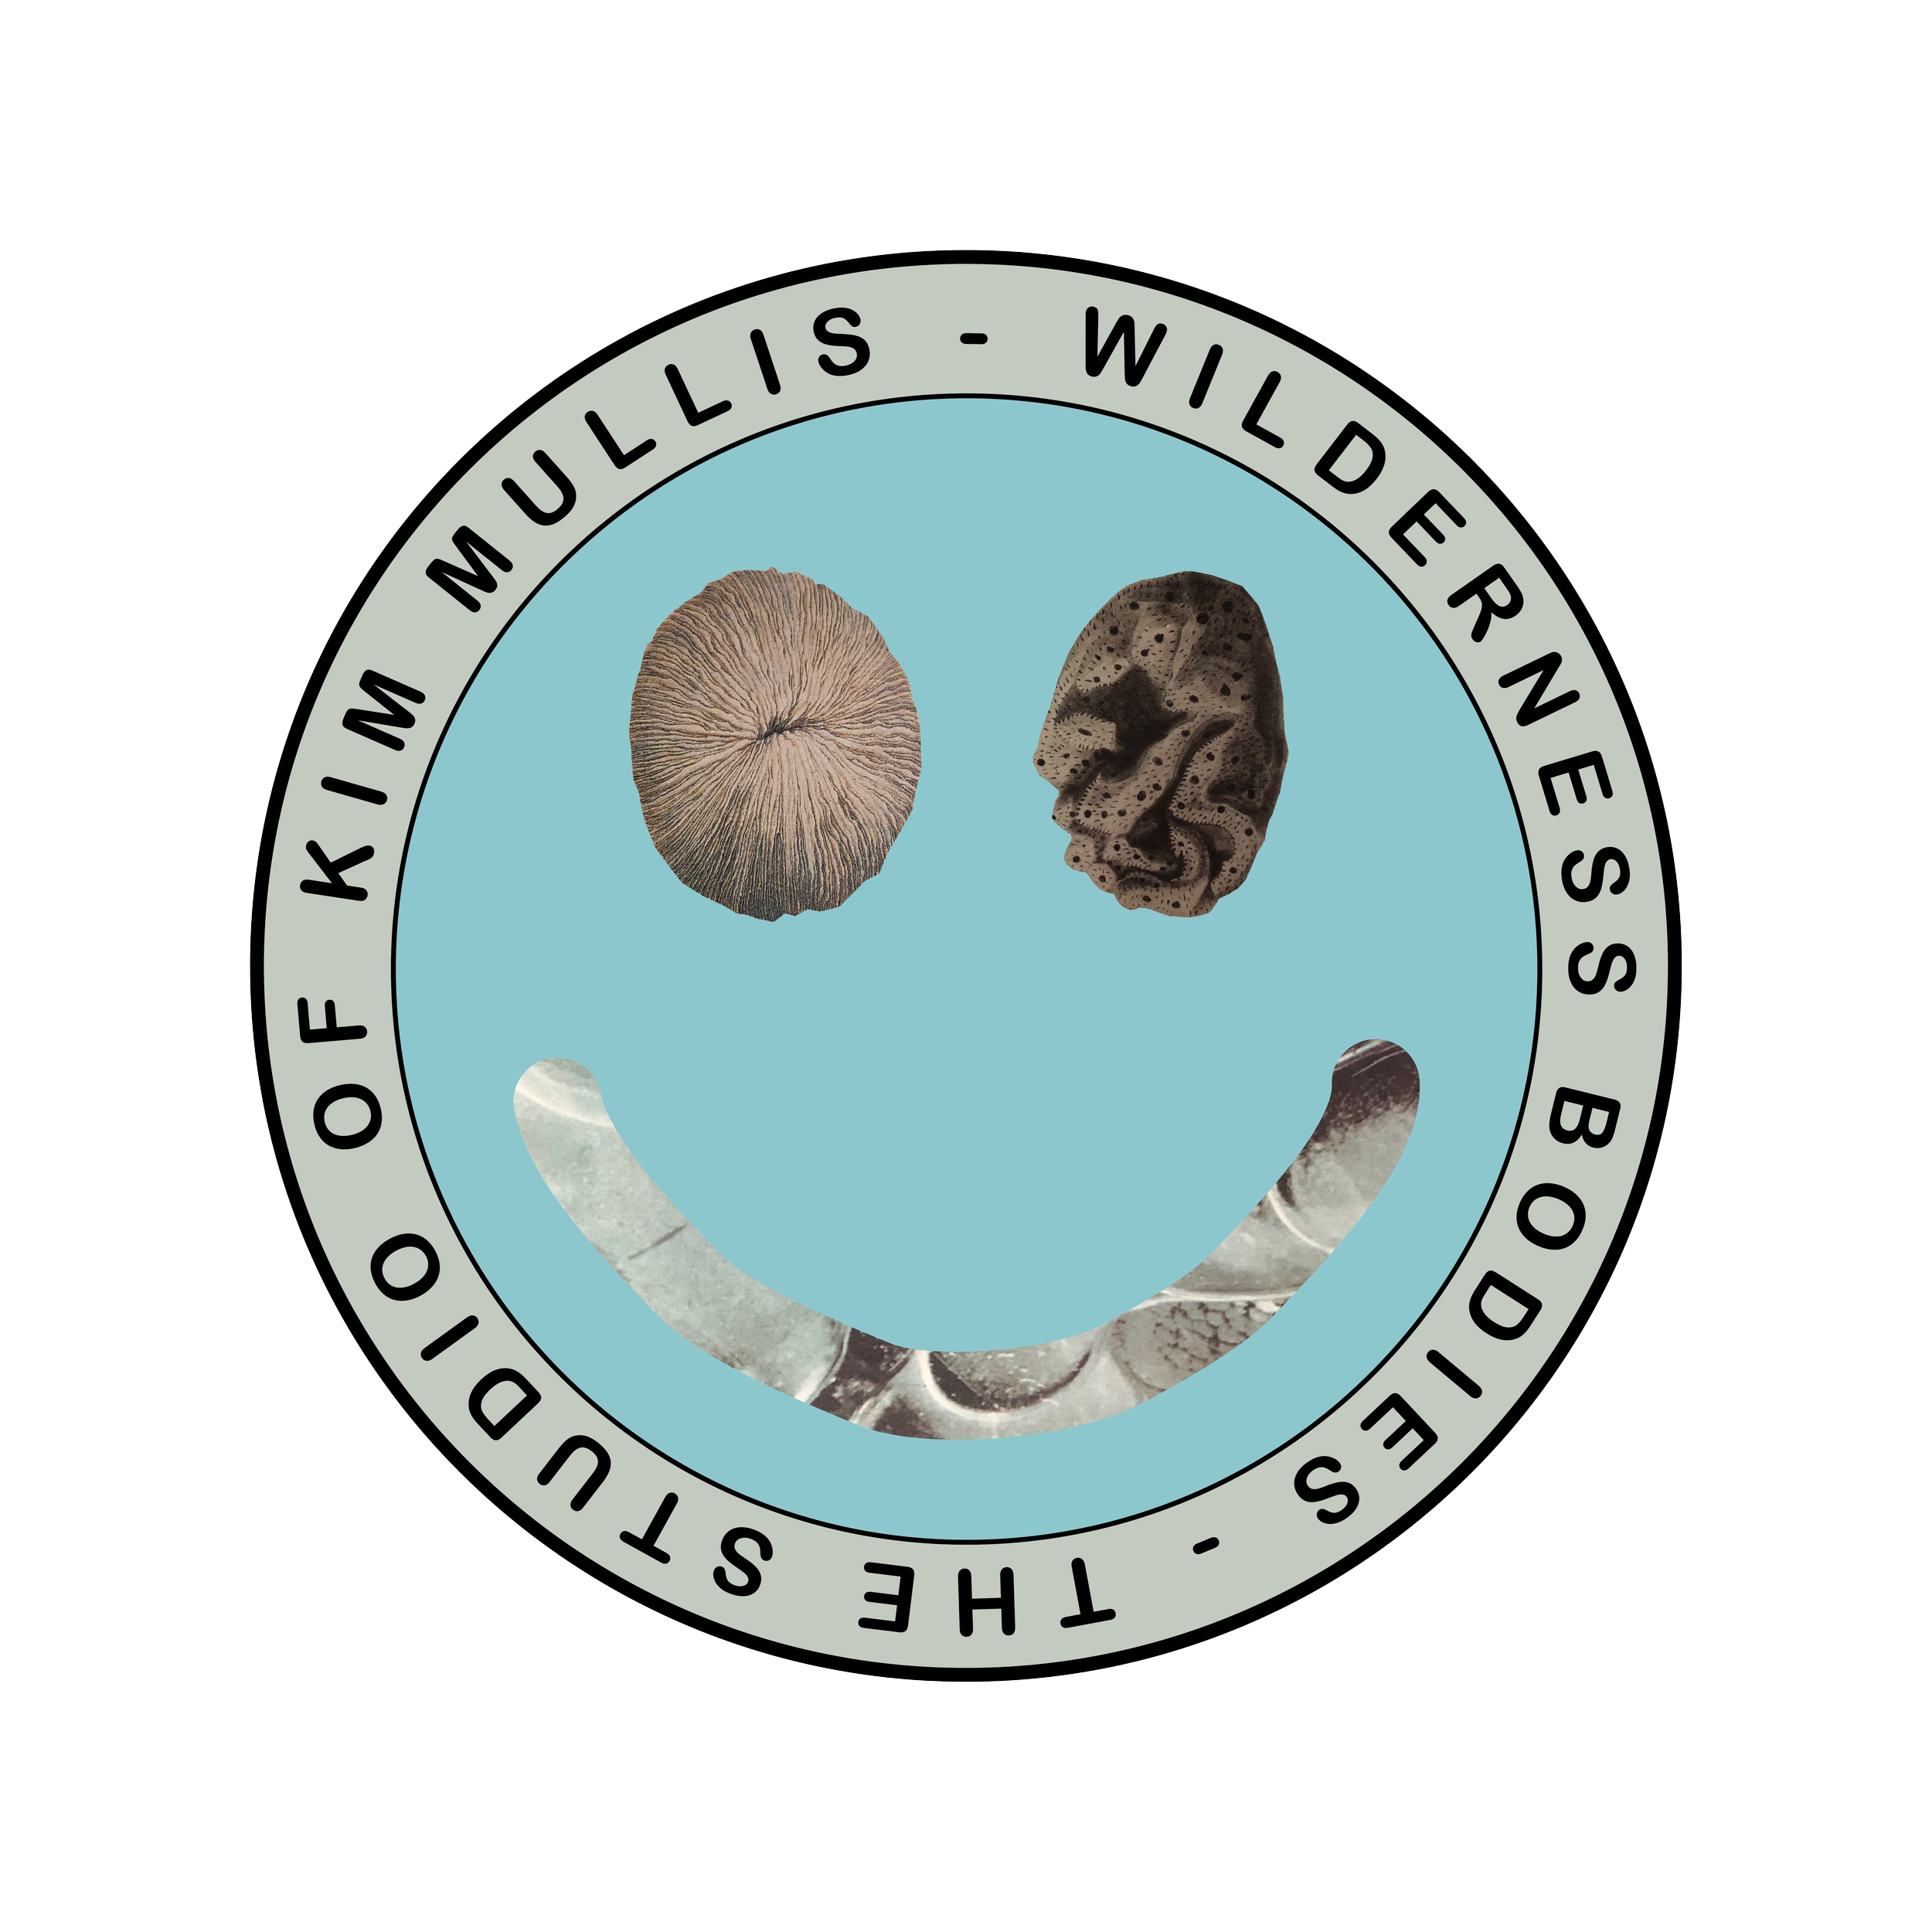 WILDBOD - THE STUDIO OF KIM MULLIS